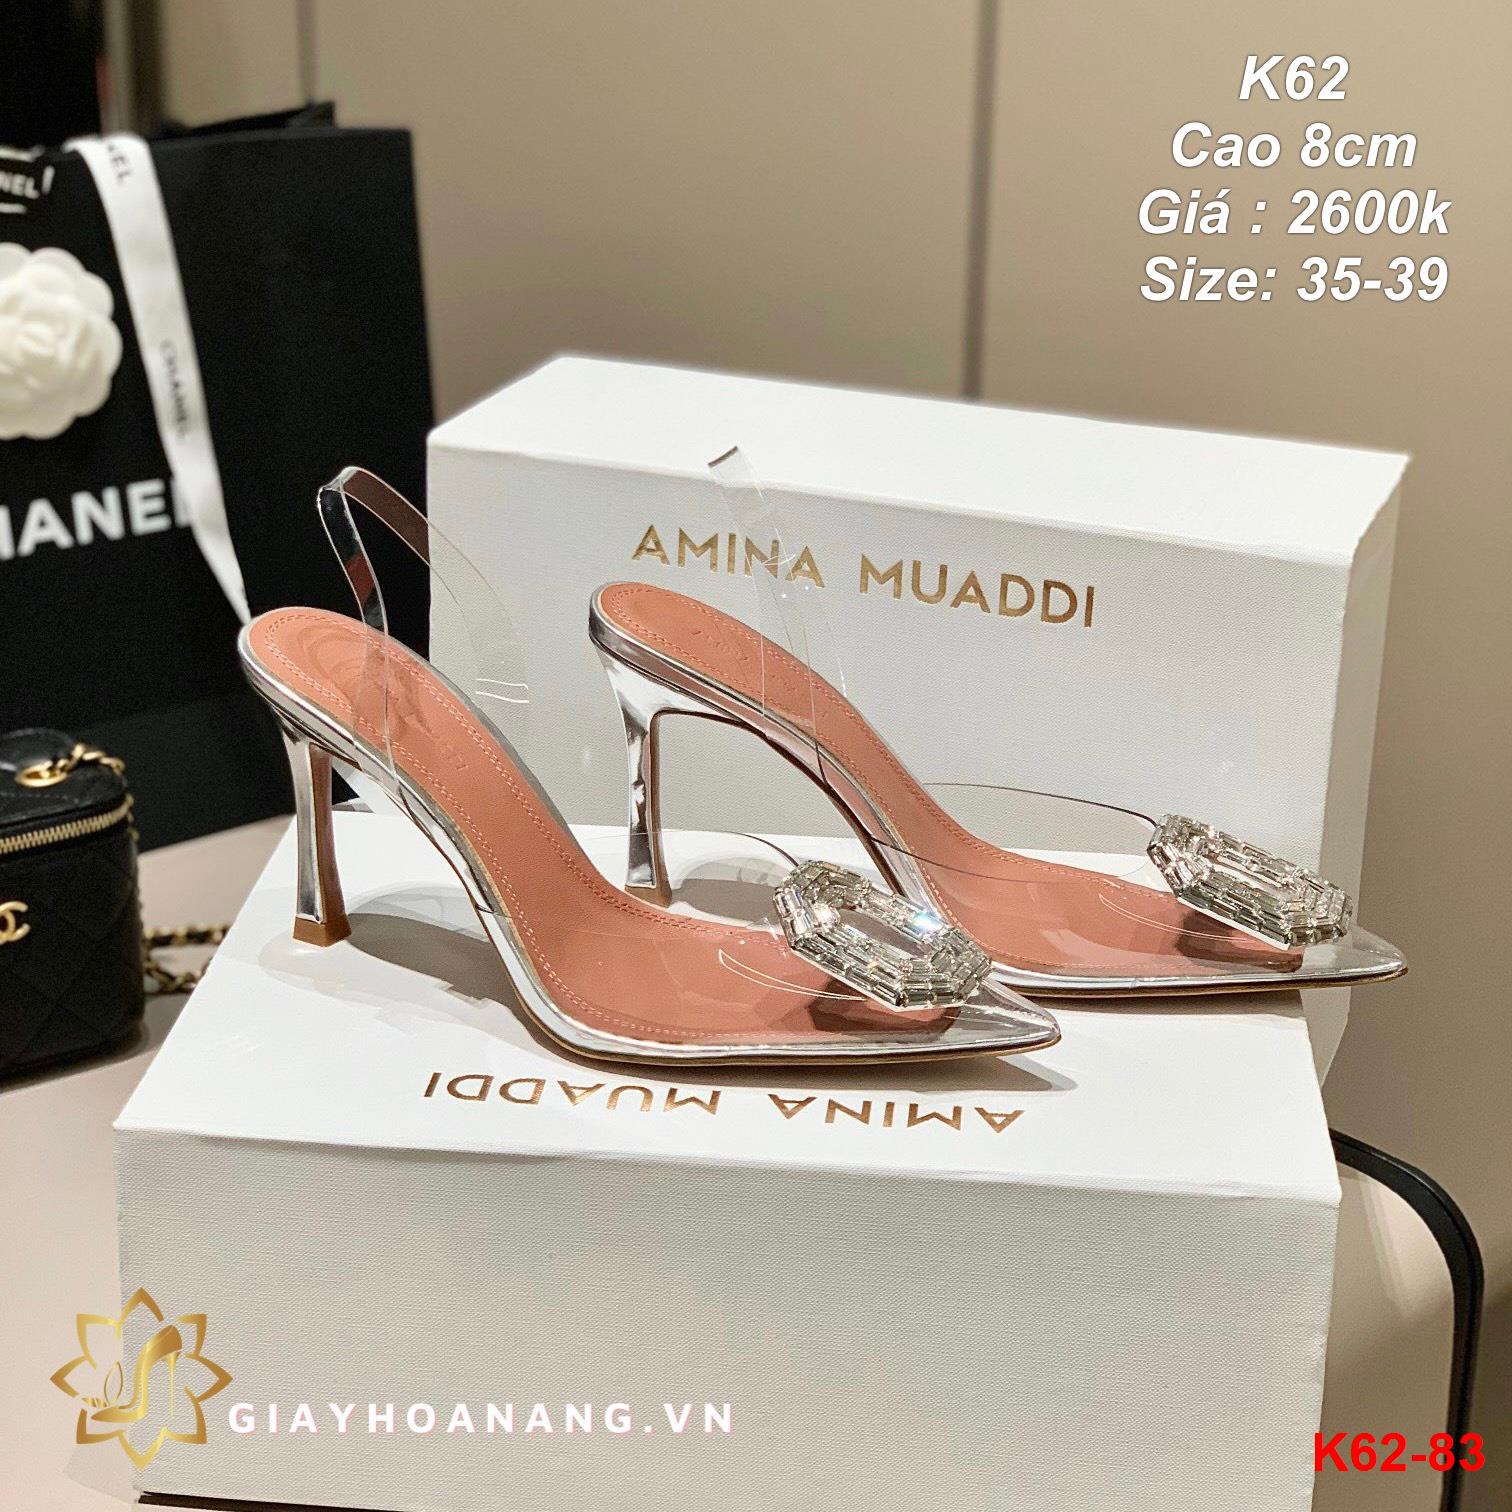 K62-83 Amina Muaddi sandal cao 8cm siêu cấp